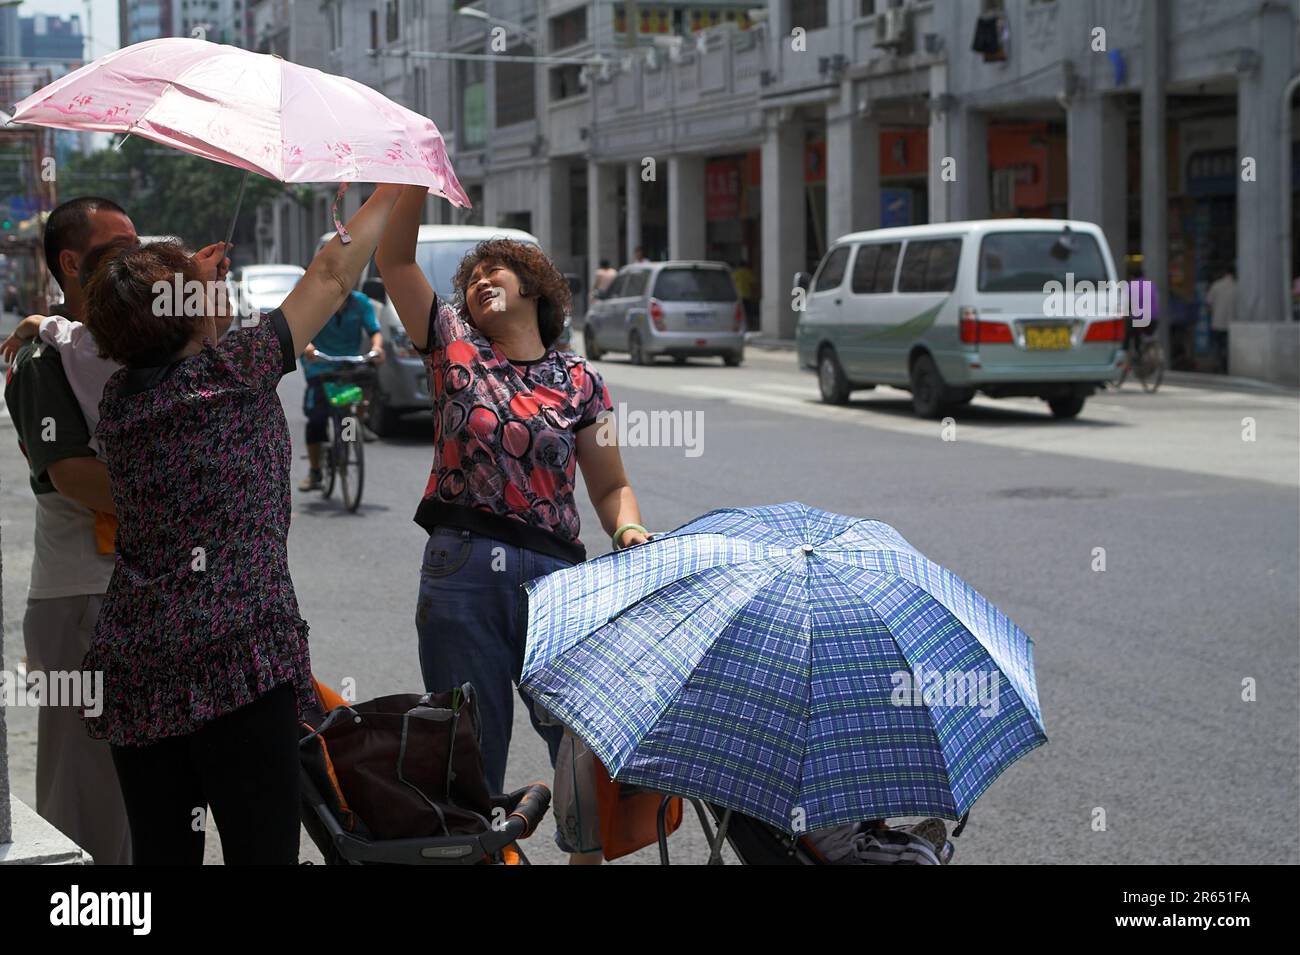 广州市 中國 Guangzhou, Chine; les femmes chinoises se répandent contre le soleil; Chinesinnen breiten einen Regenschirm gegen die sonne aus 中國婦女撐傘防曬 Banque D'Images